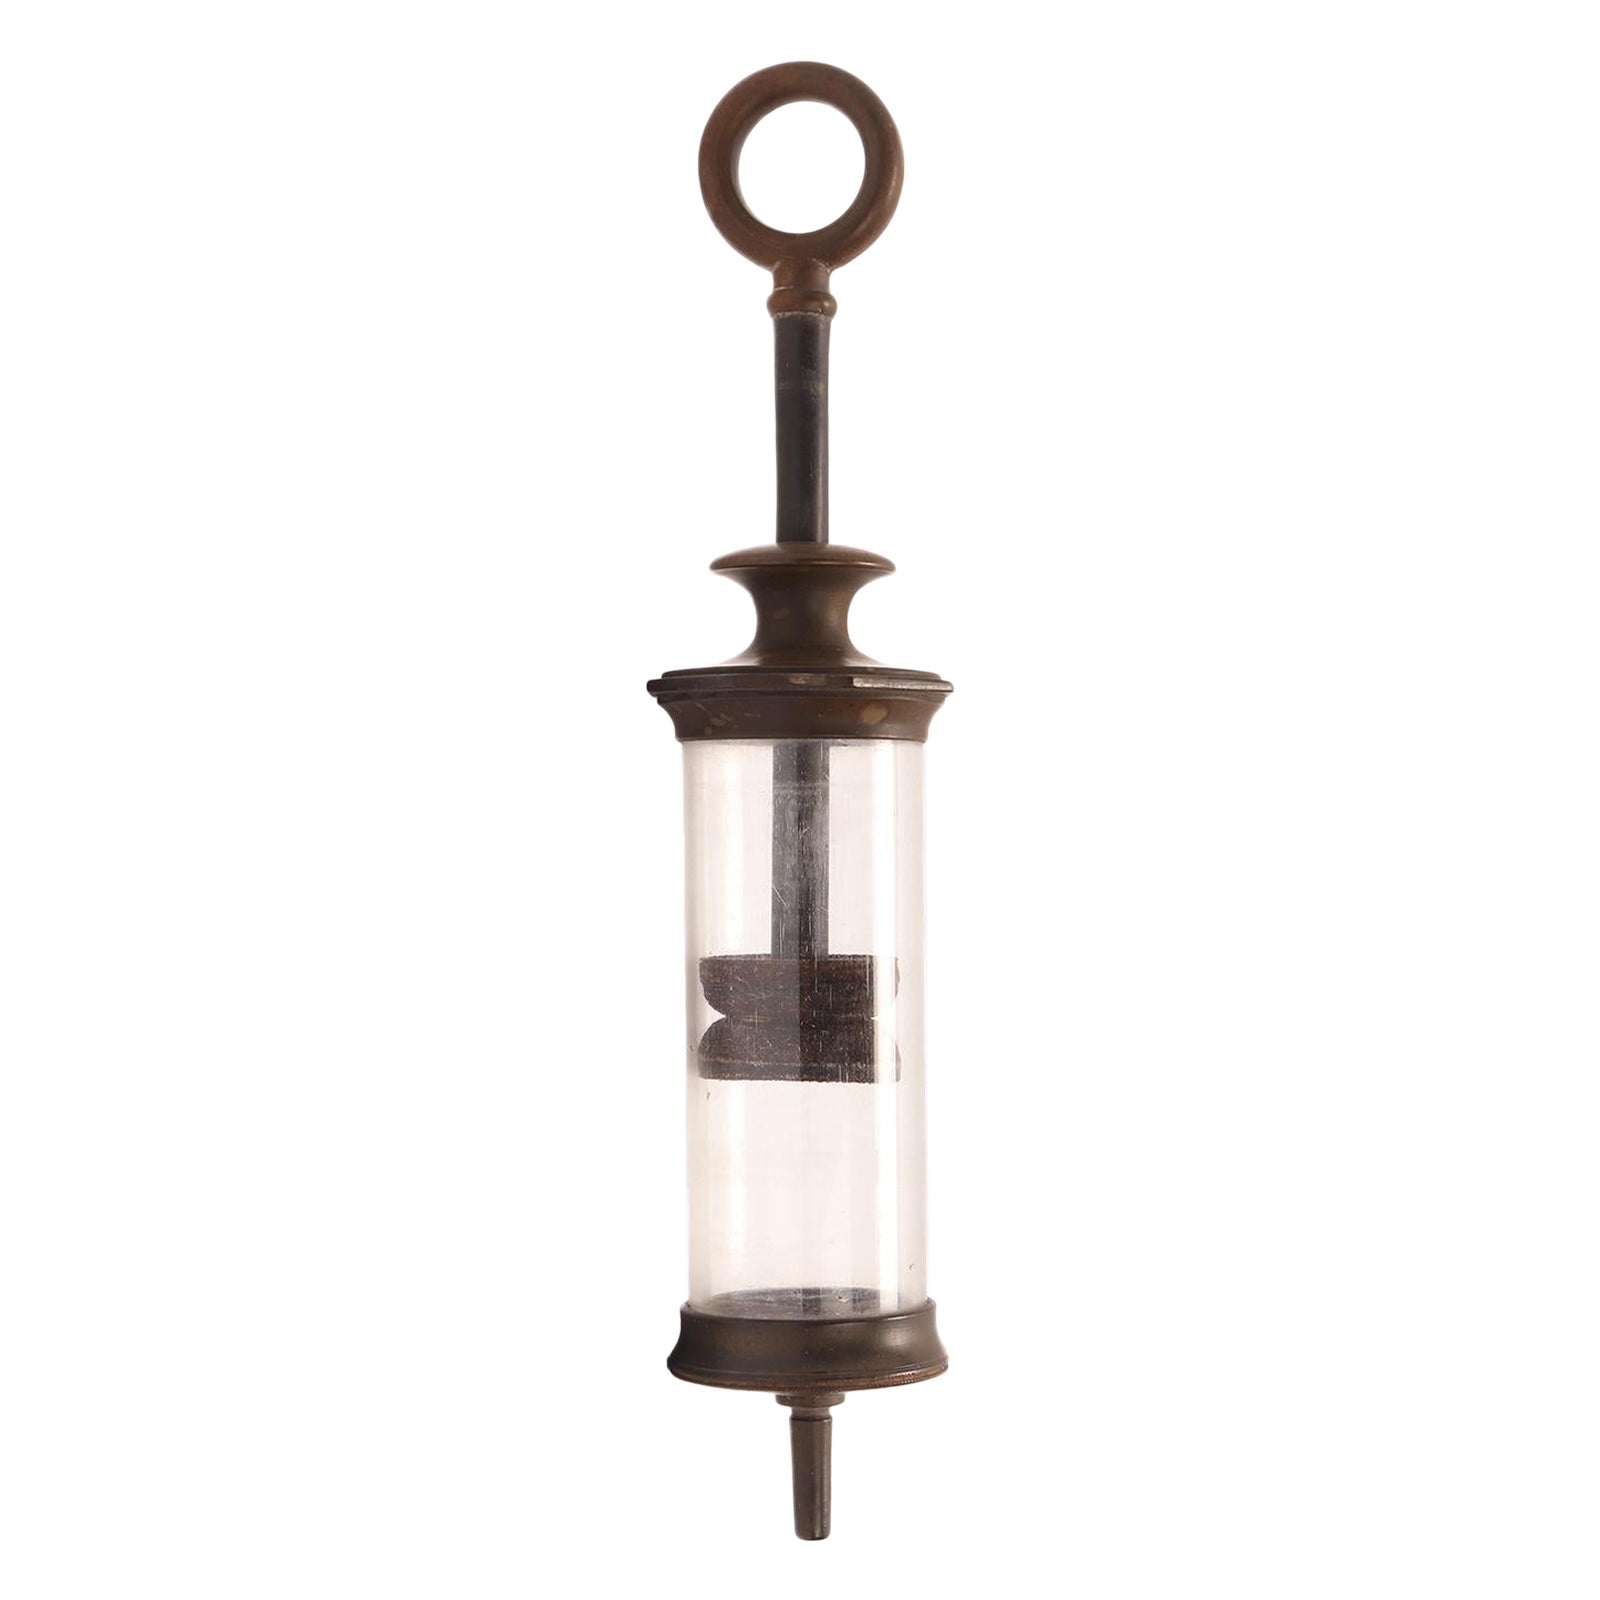 A glass and vulcanite syringe, London 1880. 